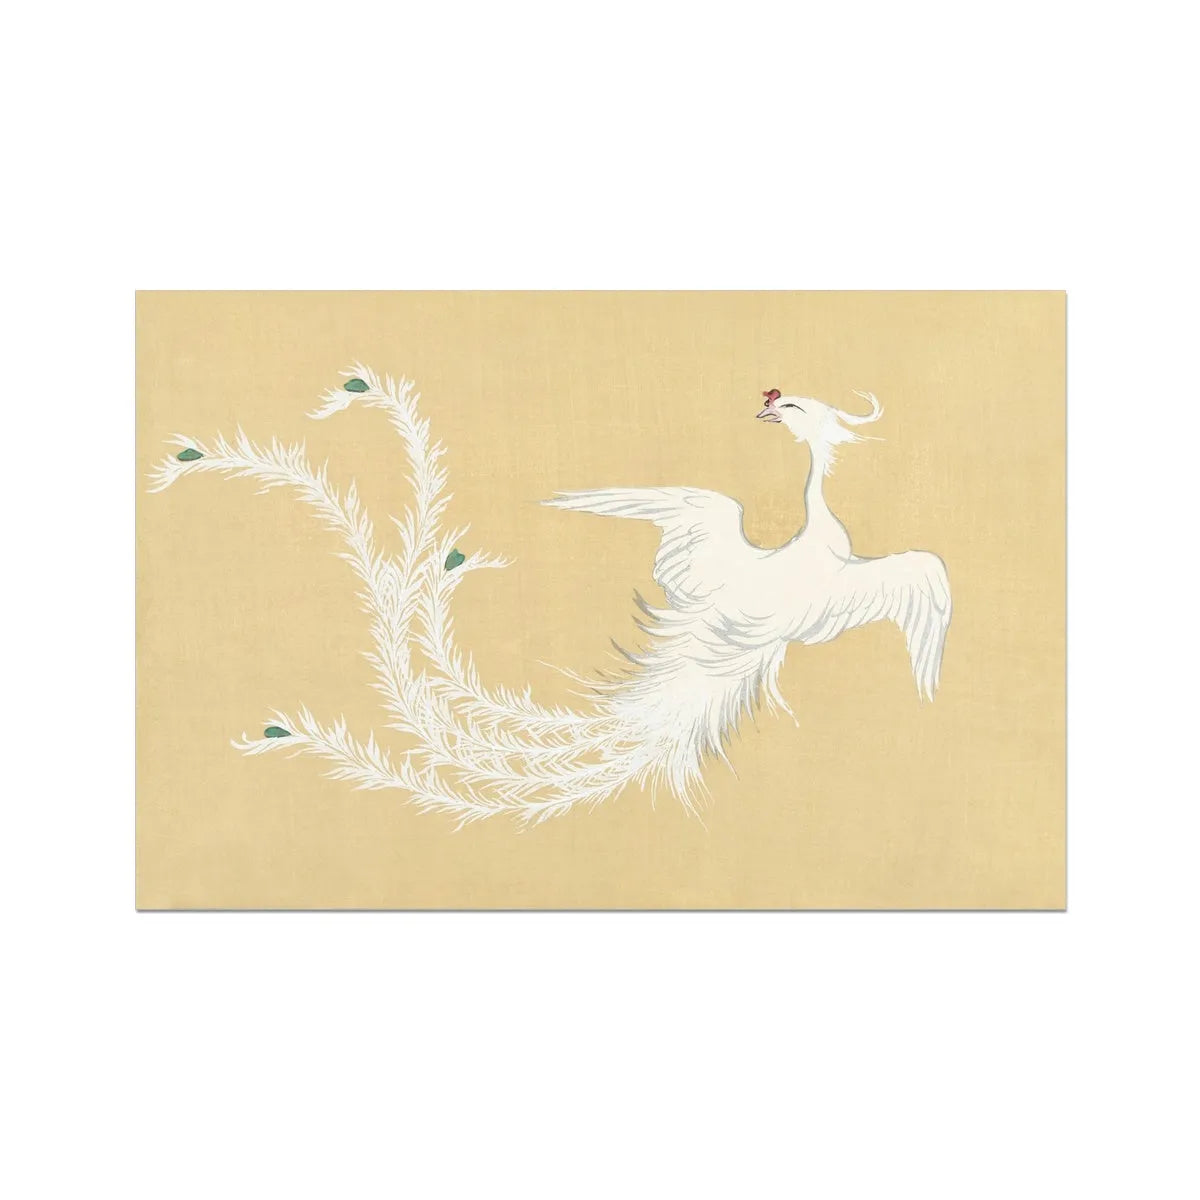 Phoenix By Kamisaka Sekka Fine Art Print - 30’x20’ - Posters Prints & Visual Artwork - Aesthetic Art